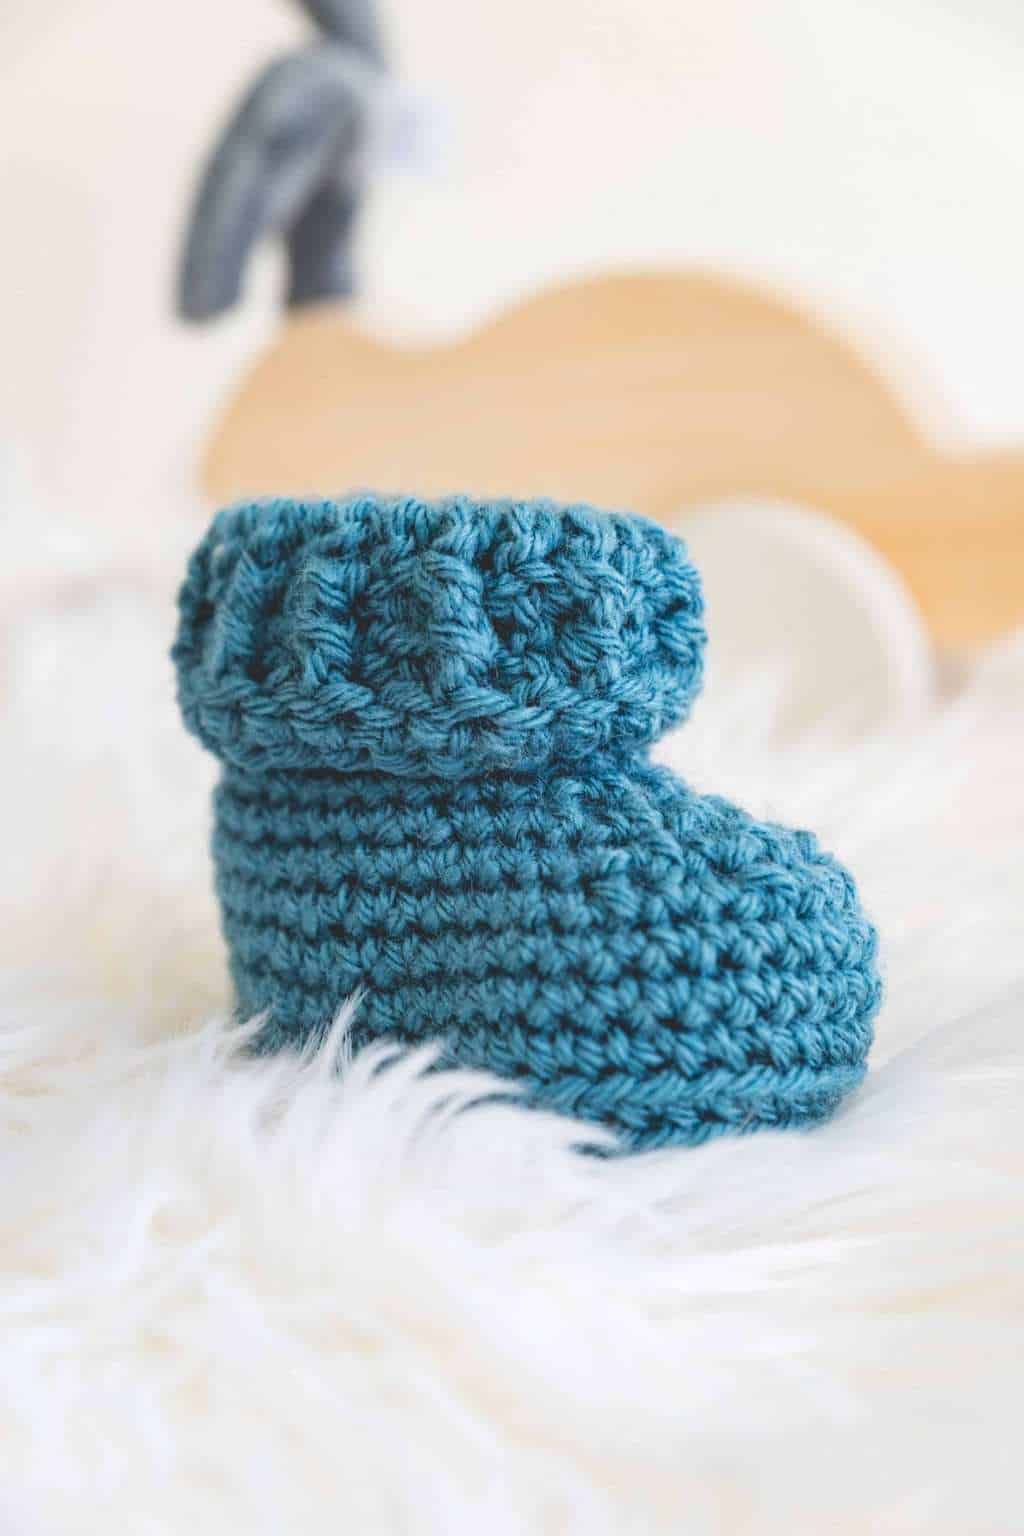 Share 209+ crochet baby slippers pattern latest